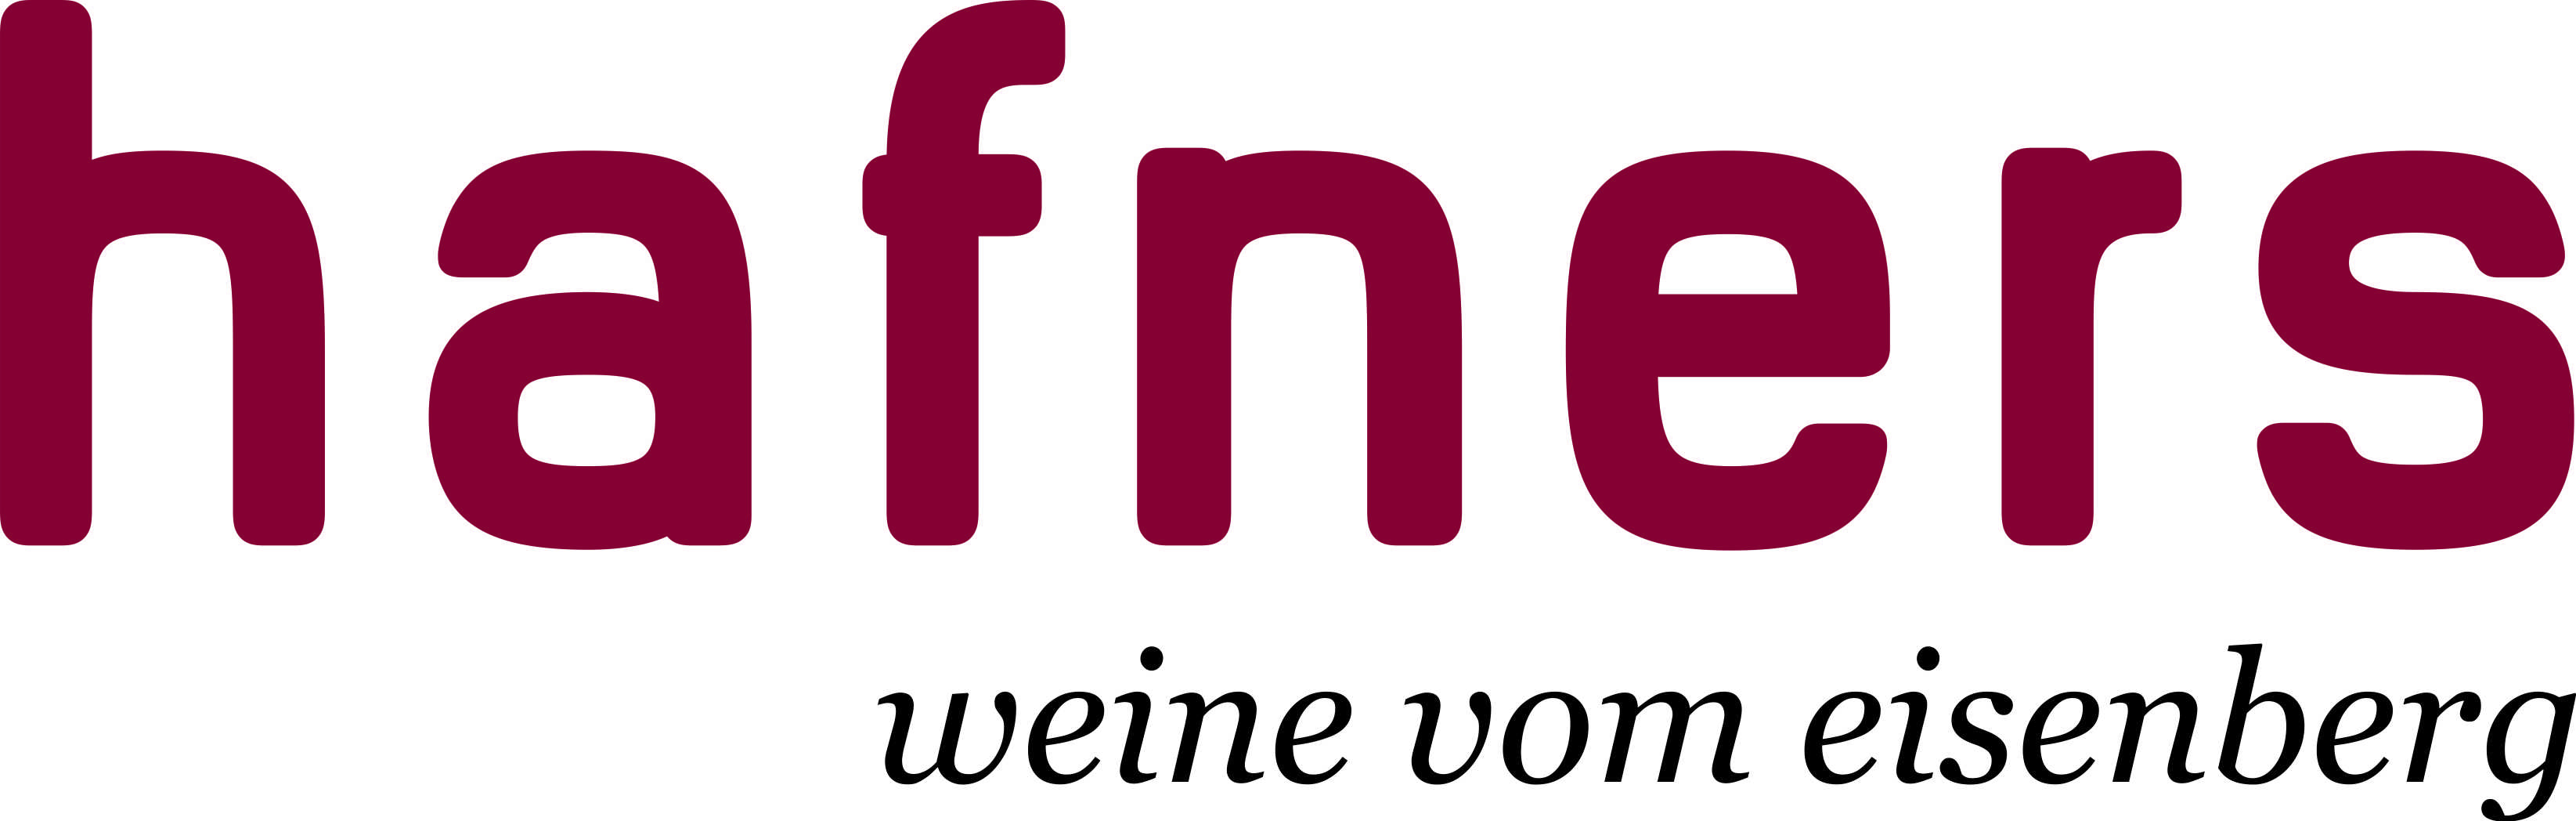 Weinbau ClemensHafner